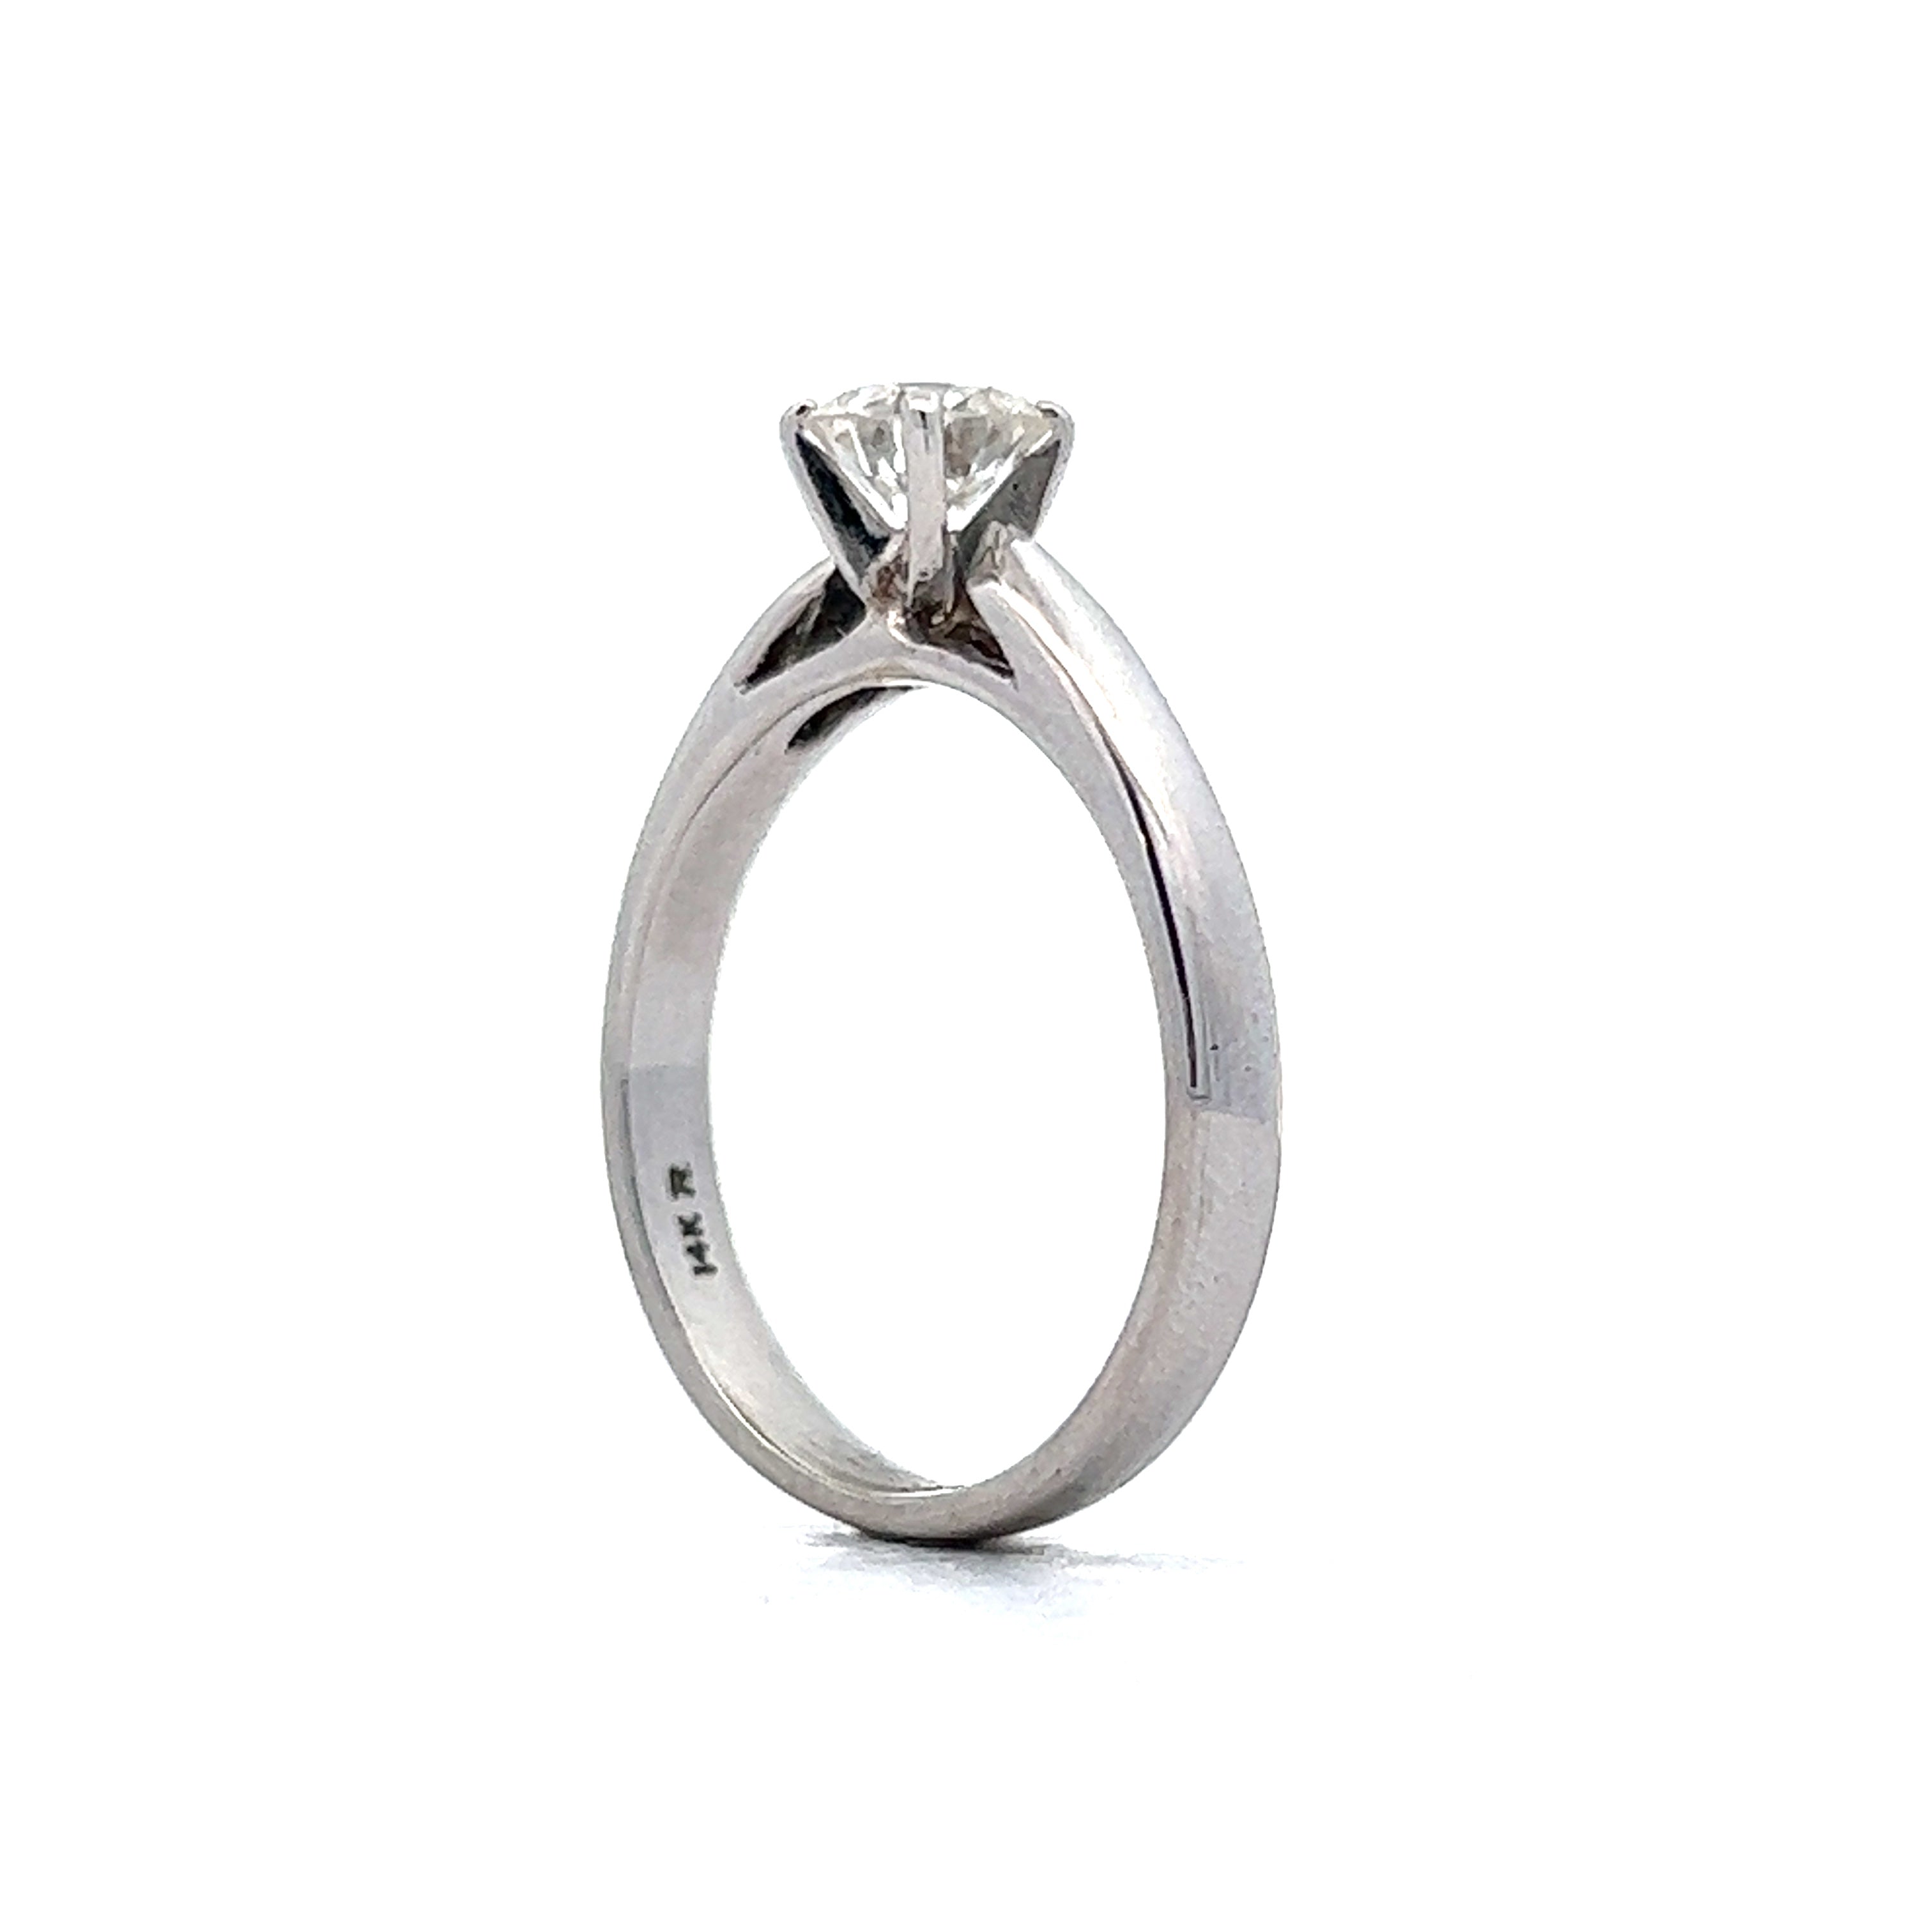 1 Carat Princess Cut Solitaire Diamond 18K Rose Gold Ring JL AU 19002R